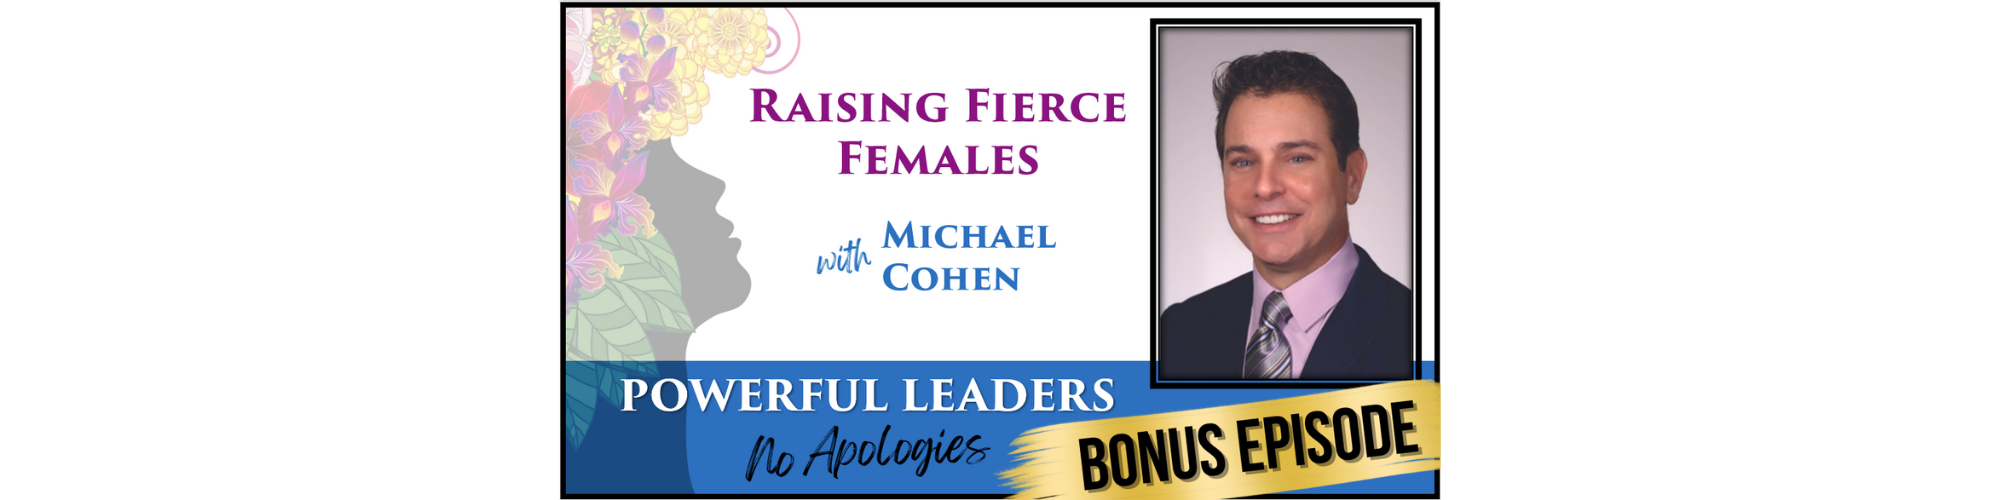 Powerful Leaders, No Apologies Bonus Episode Podcast Banner